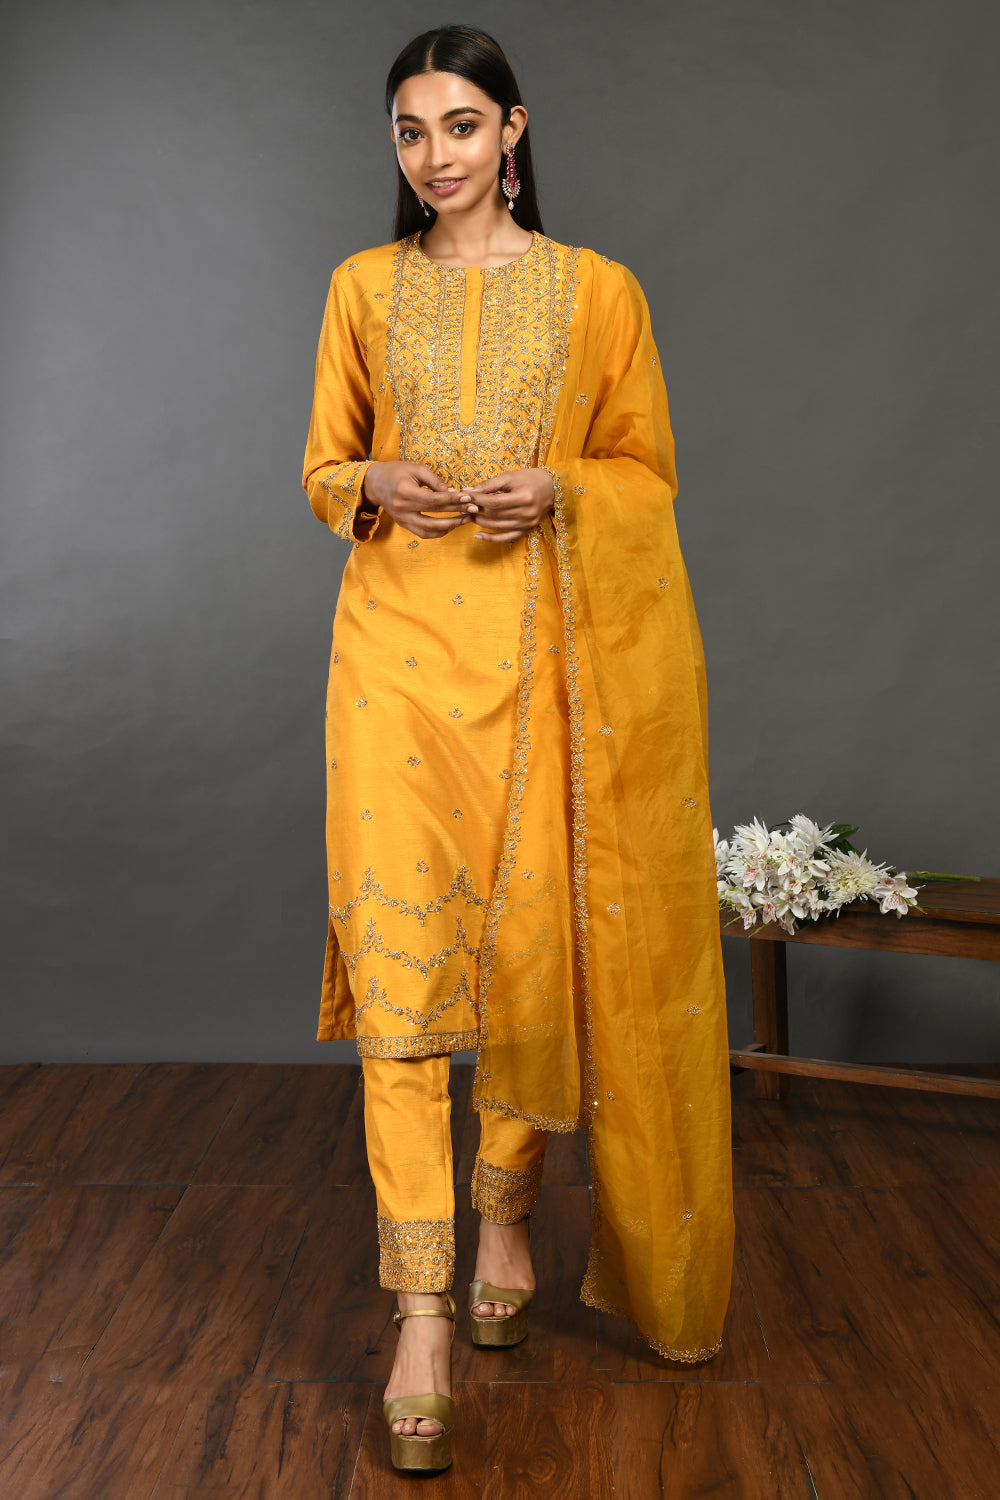 Buy Purple Roman Silk Salwar Suit (NWS-6743) Online